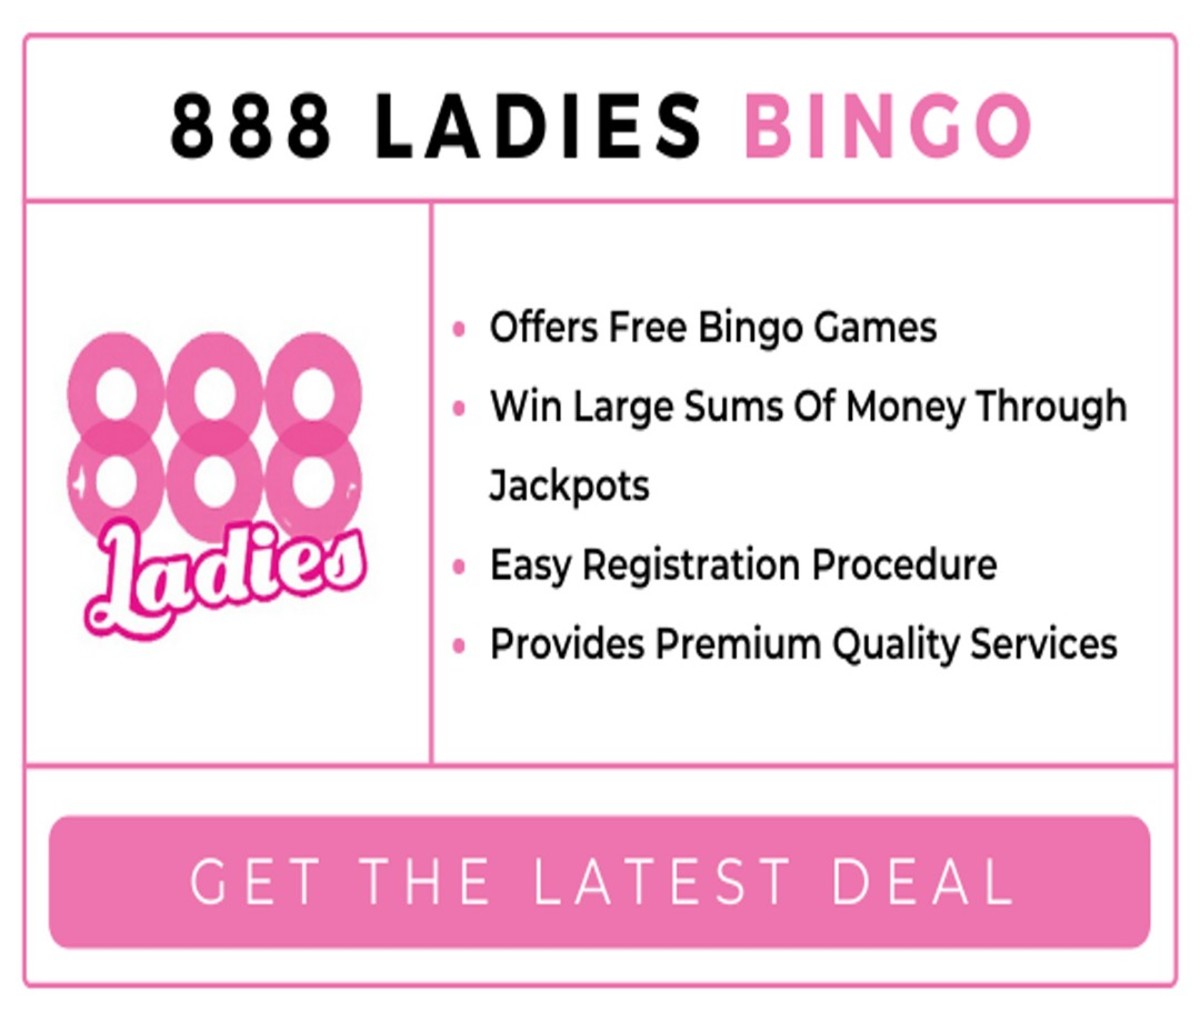 888 Ladies Bingo - Multiple Bingo Games For Android; Women’ Gaming Platform